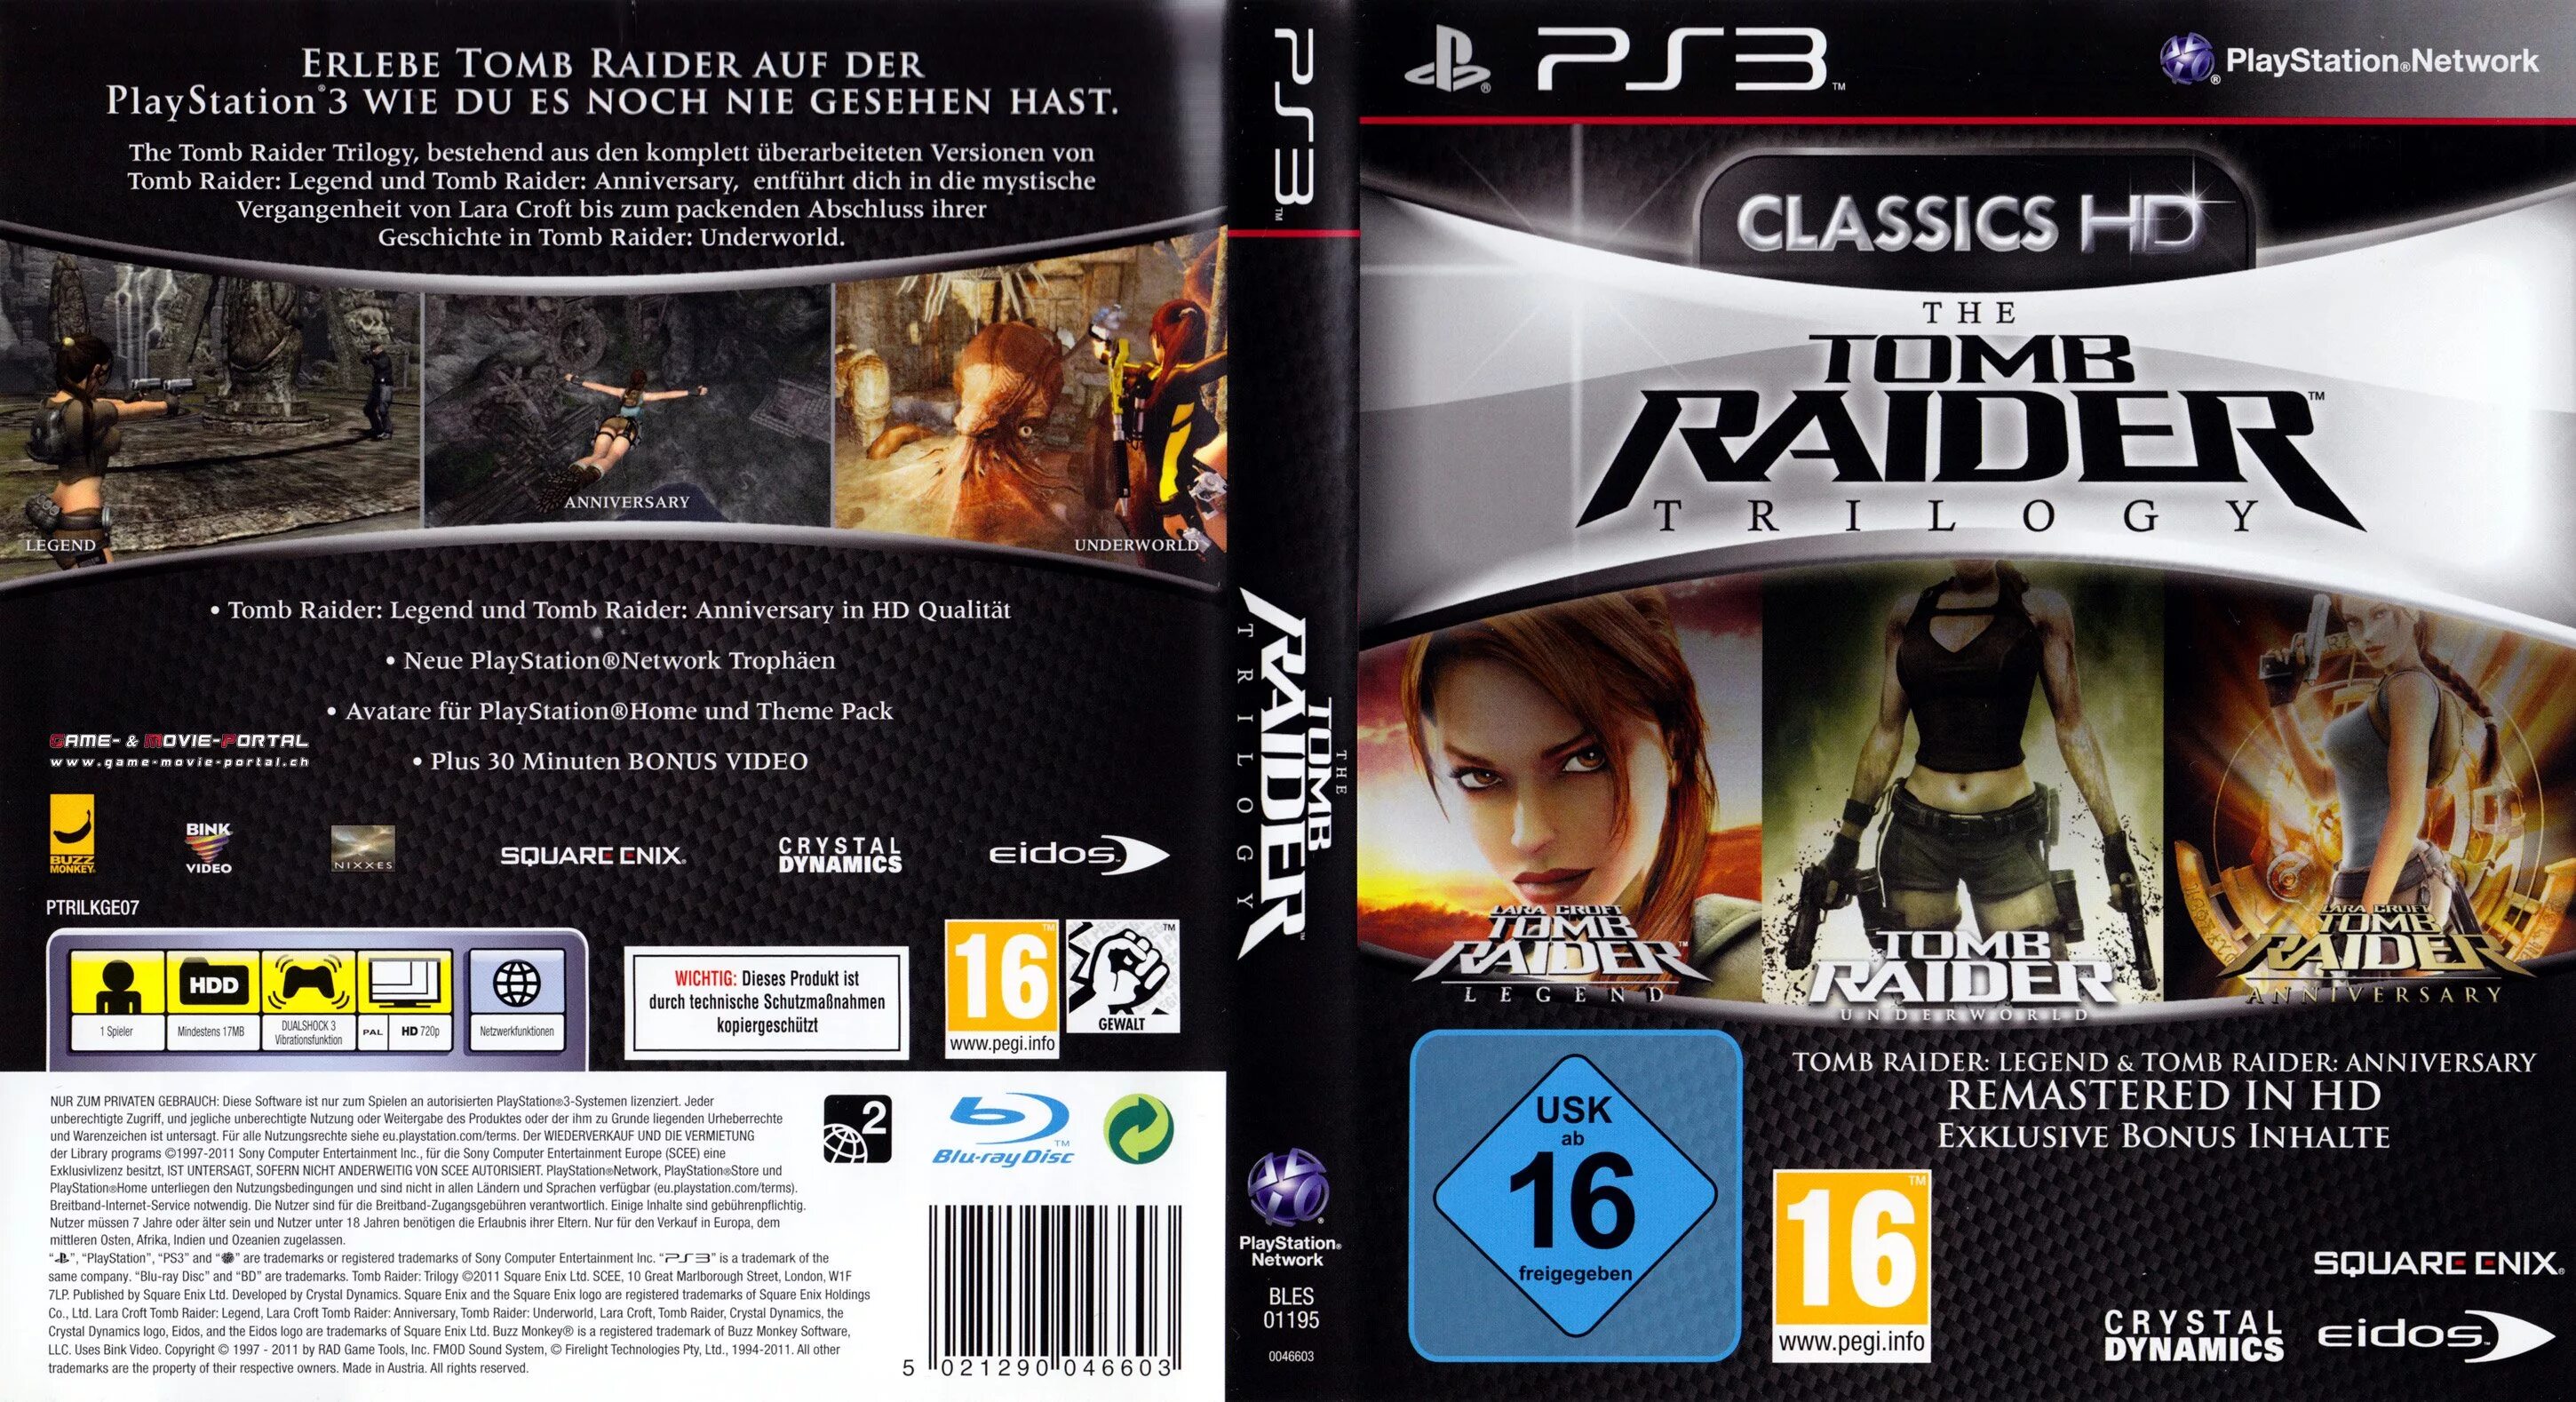 Tomb Raider Trilogy (ps3) диск. Tomb Raider 2 ps3. Томб Райдер 2 на ПС 3. Tomb Raider Trilogy ps3.